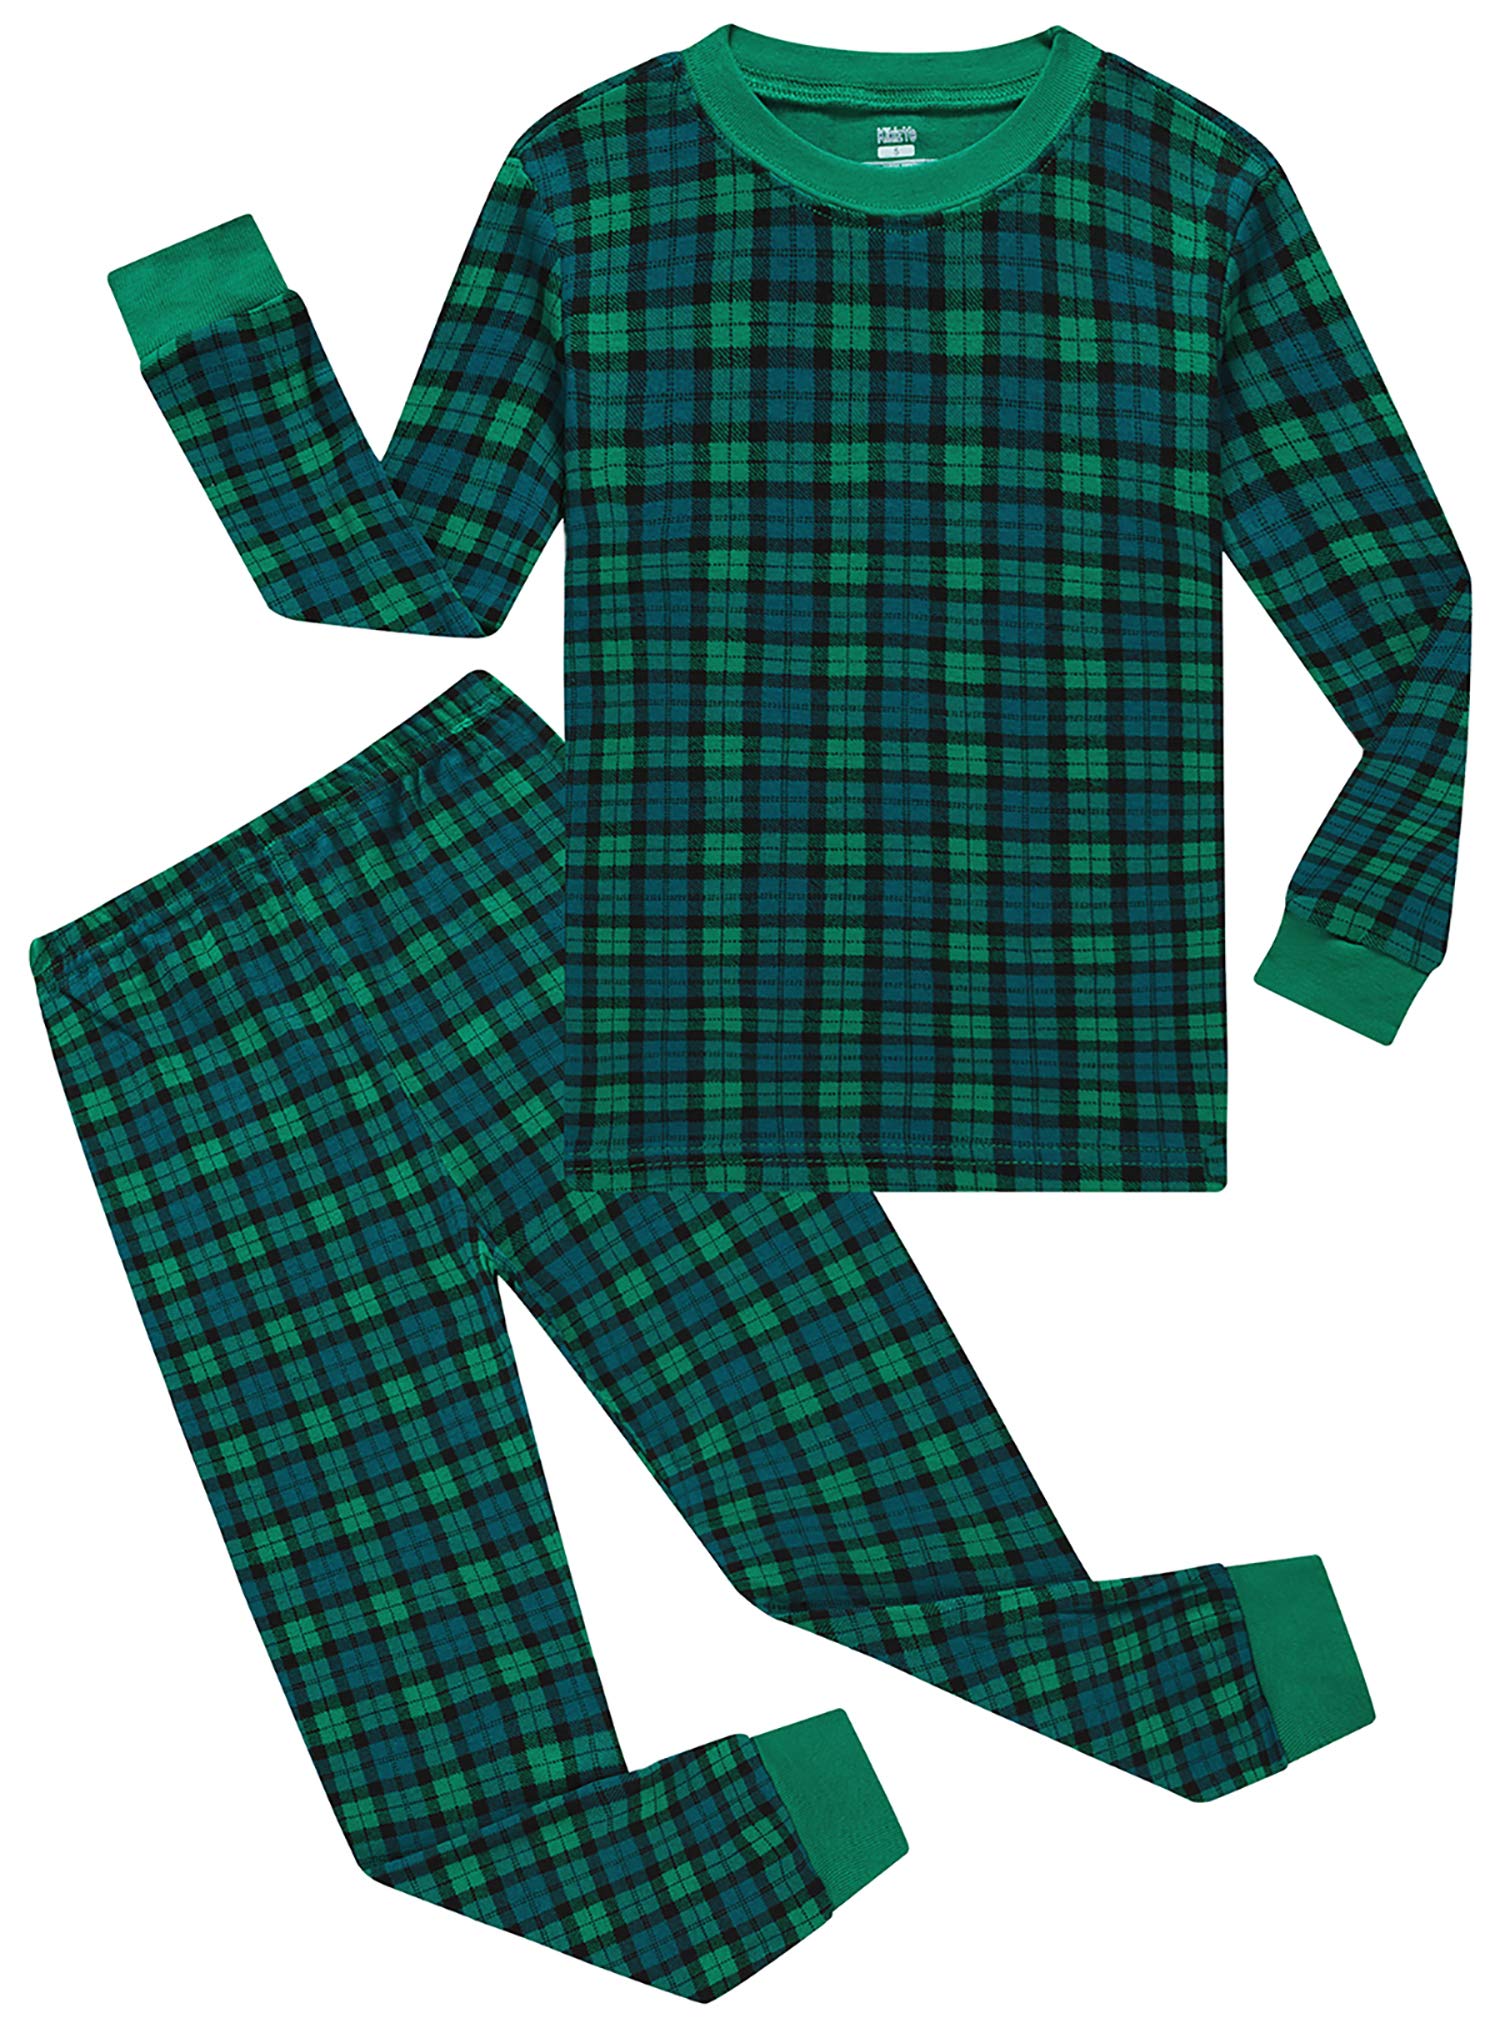 KikizYe Christmas Plaid Pjs Baby Boys Long Sleeve Pajamas 100 Cotton Green Sleepwear Holiday Infant Size 18-24 Months